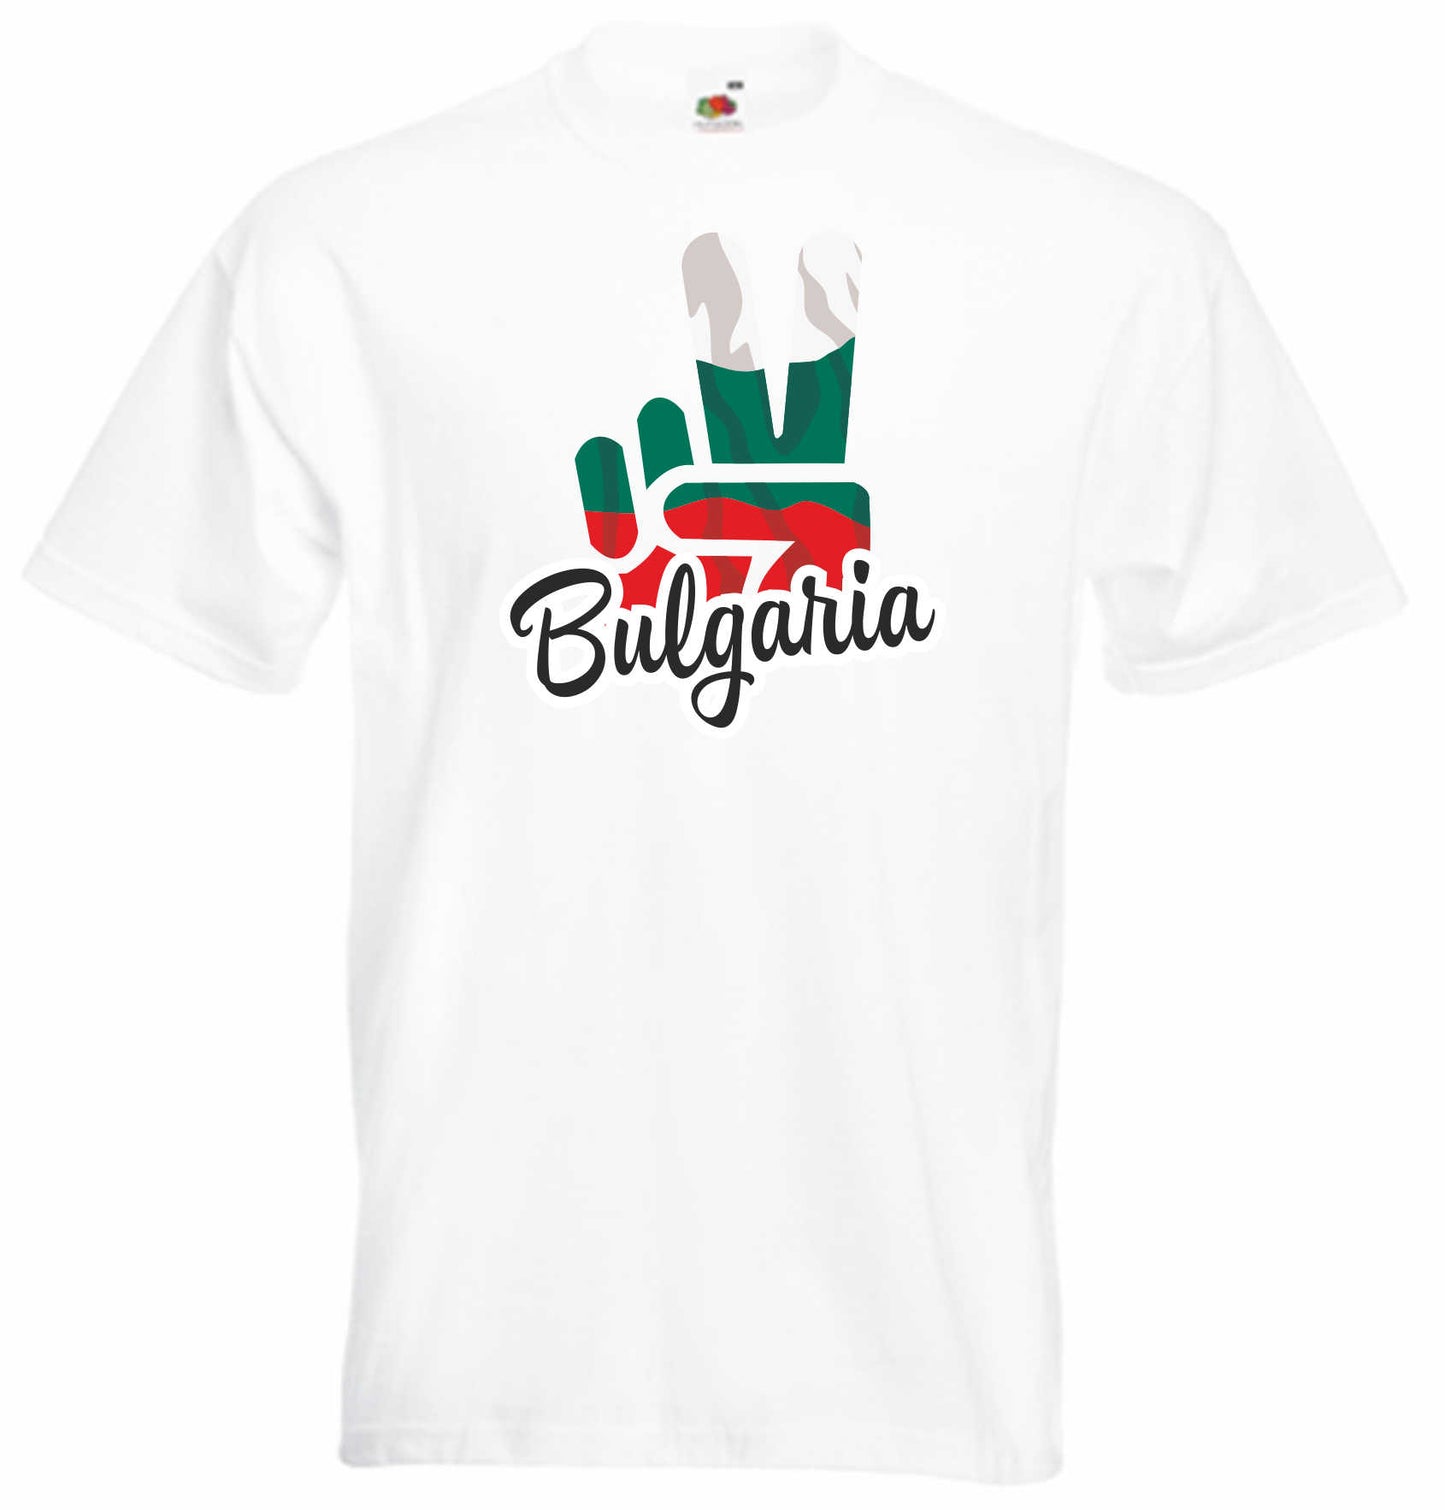 T-Shirt Herren - Victory - Flagge / Fahne - Bulgaria - Sieg